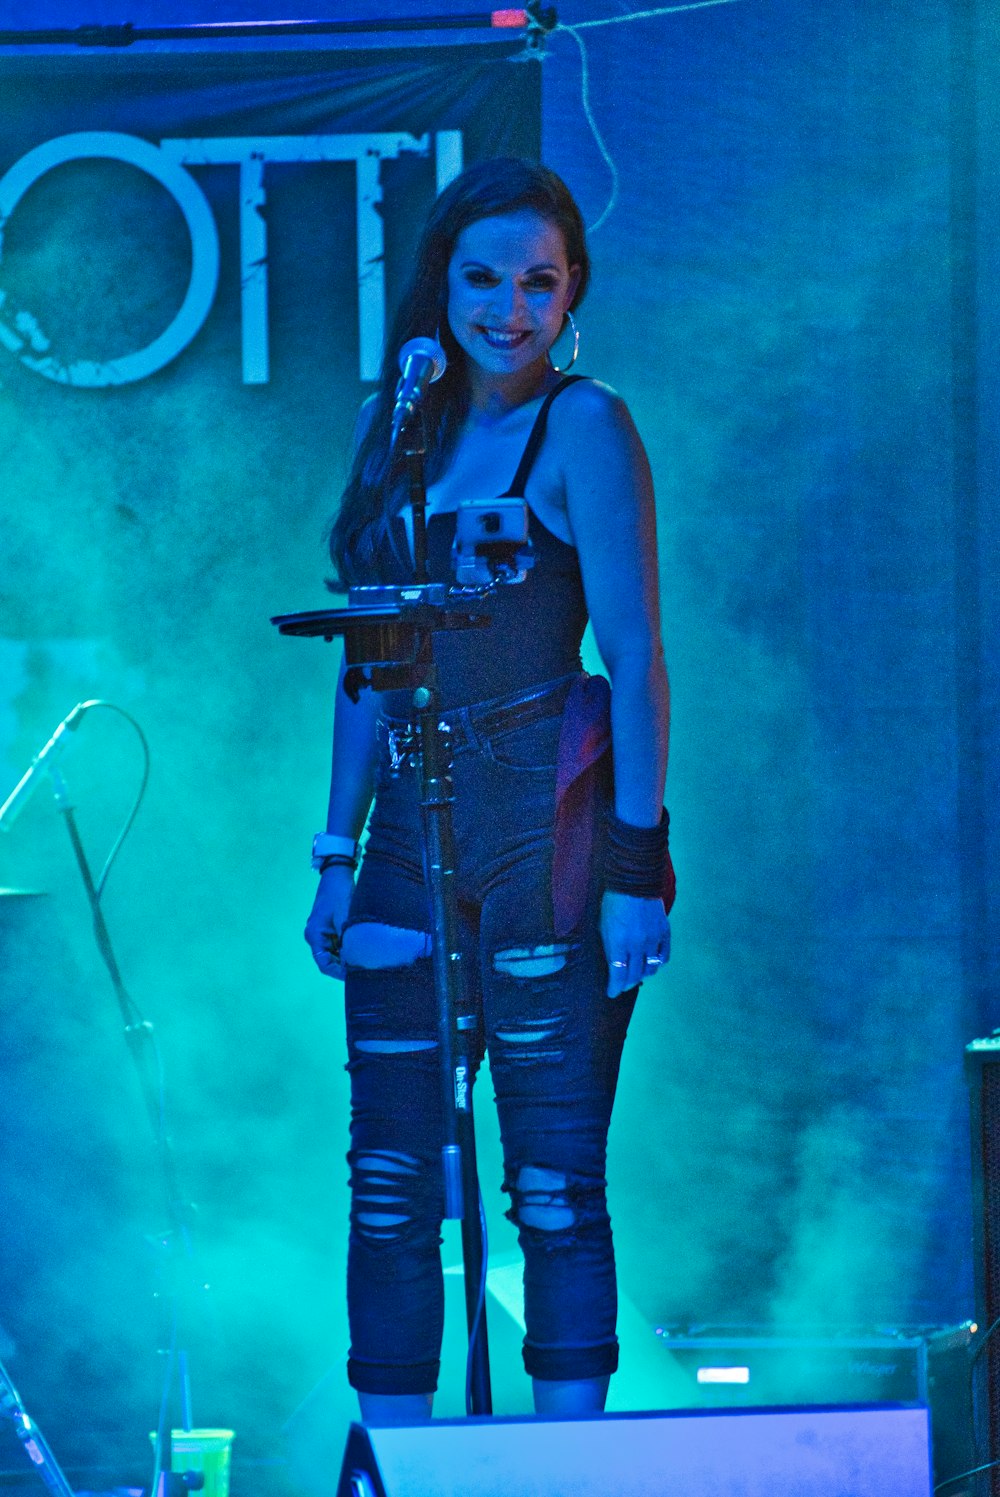 woman standing near microphone